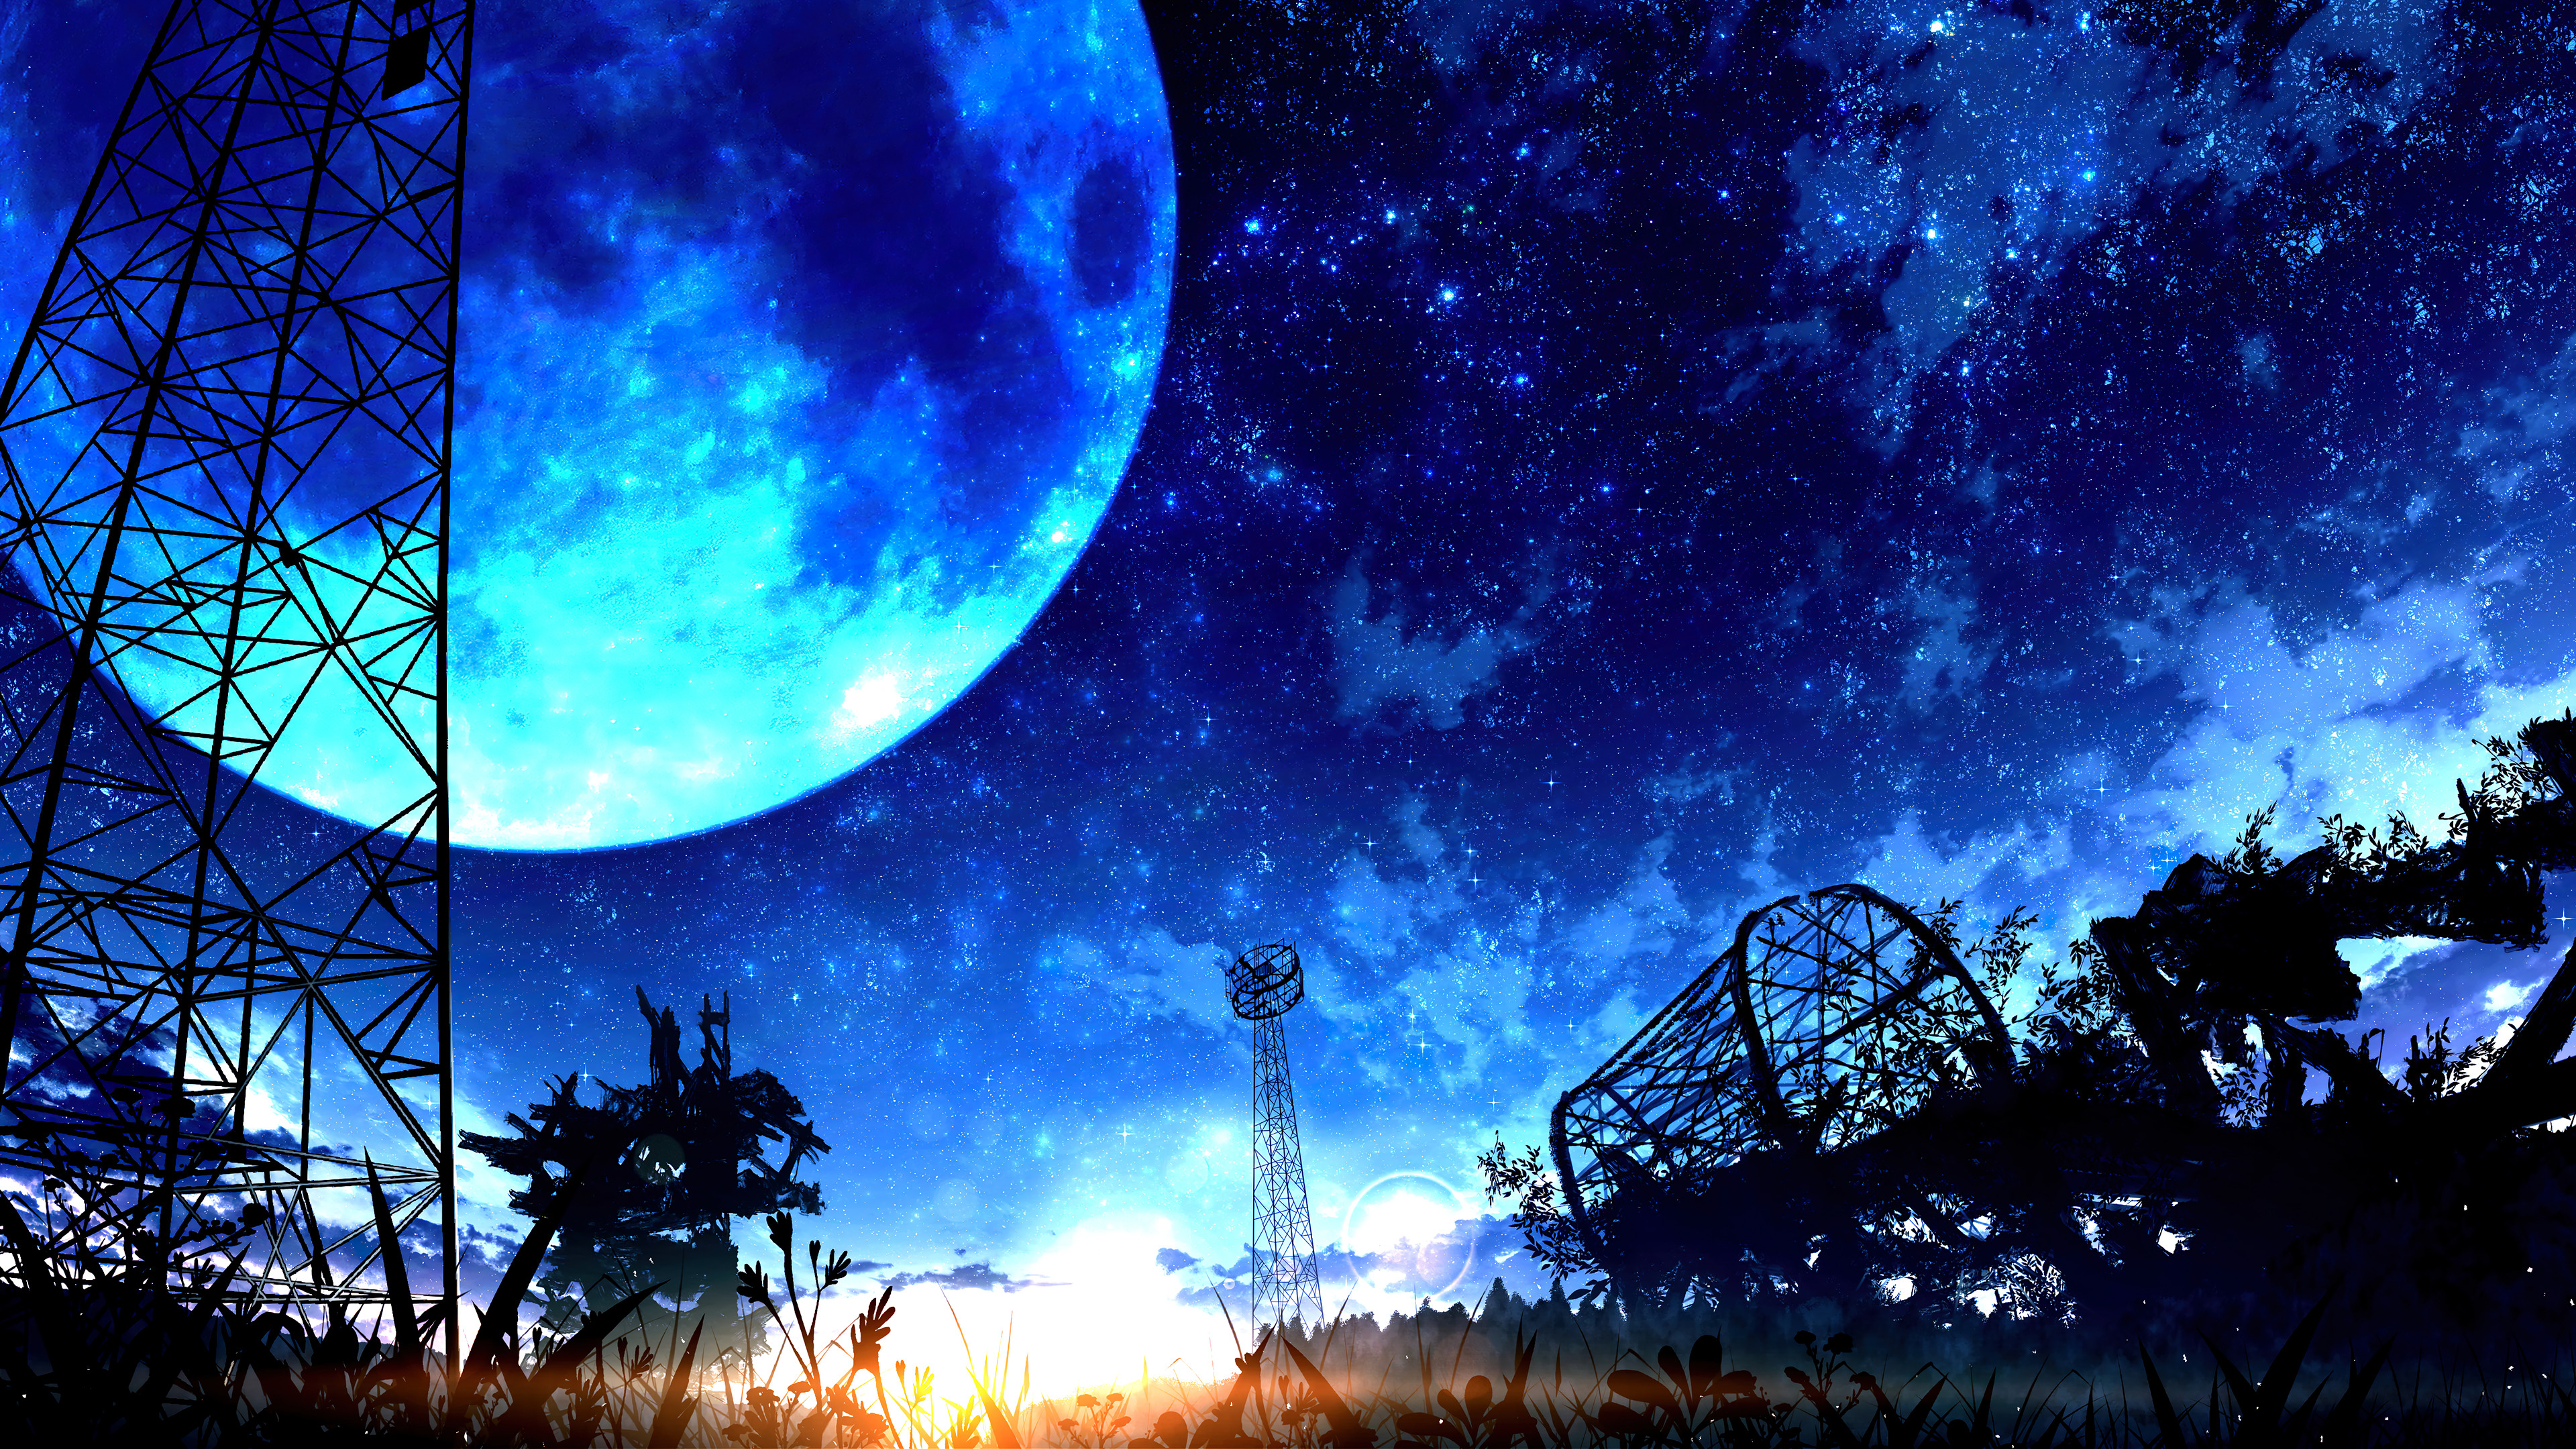 Full Moon Night Sky Scenery Sunrise Anime Art PC DeskK Wallpaper free Download